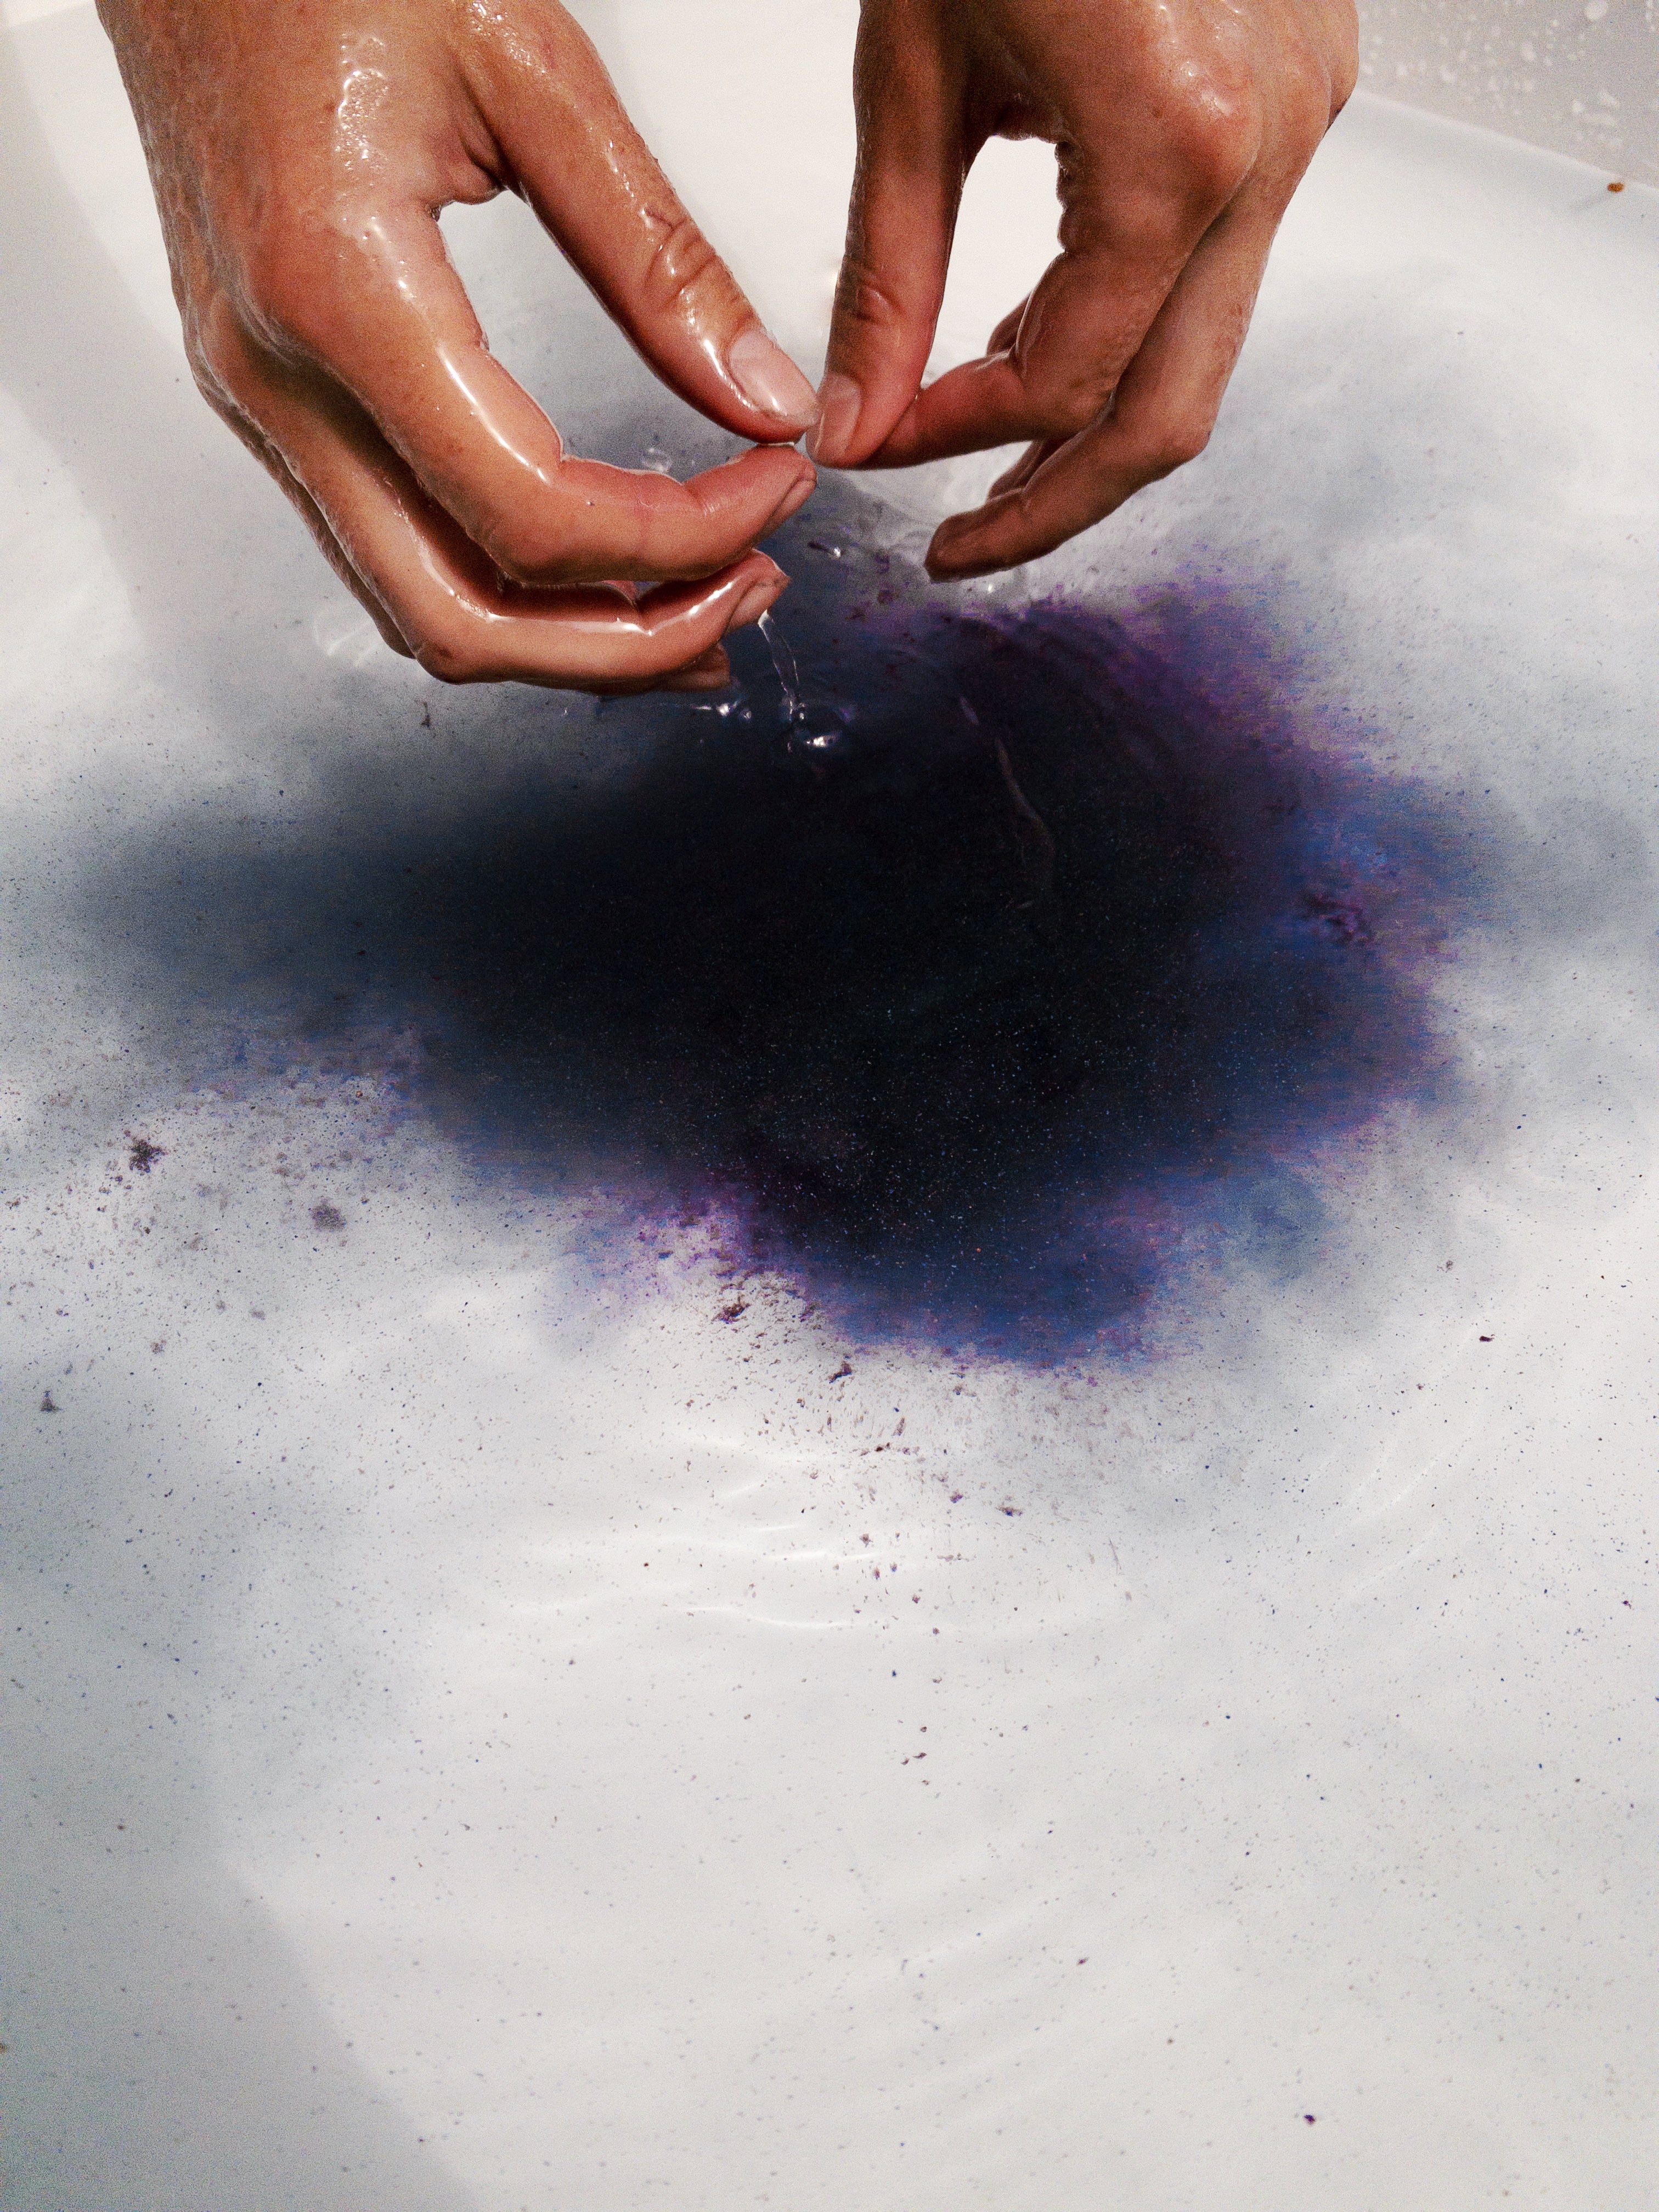 A person dissolving Heathen's purple herbal bath soak into bath water. 